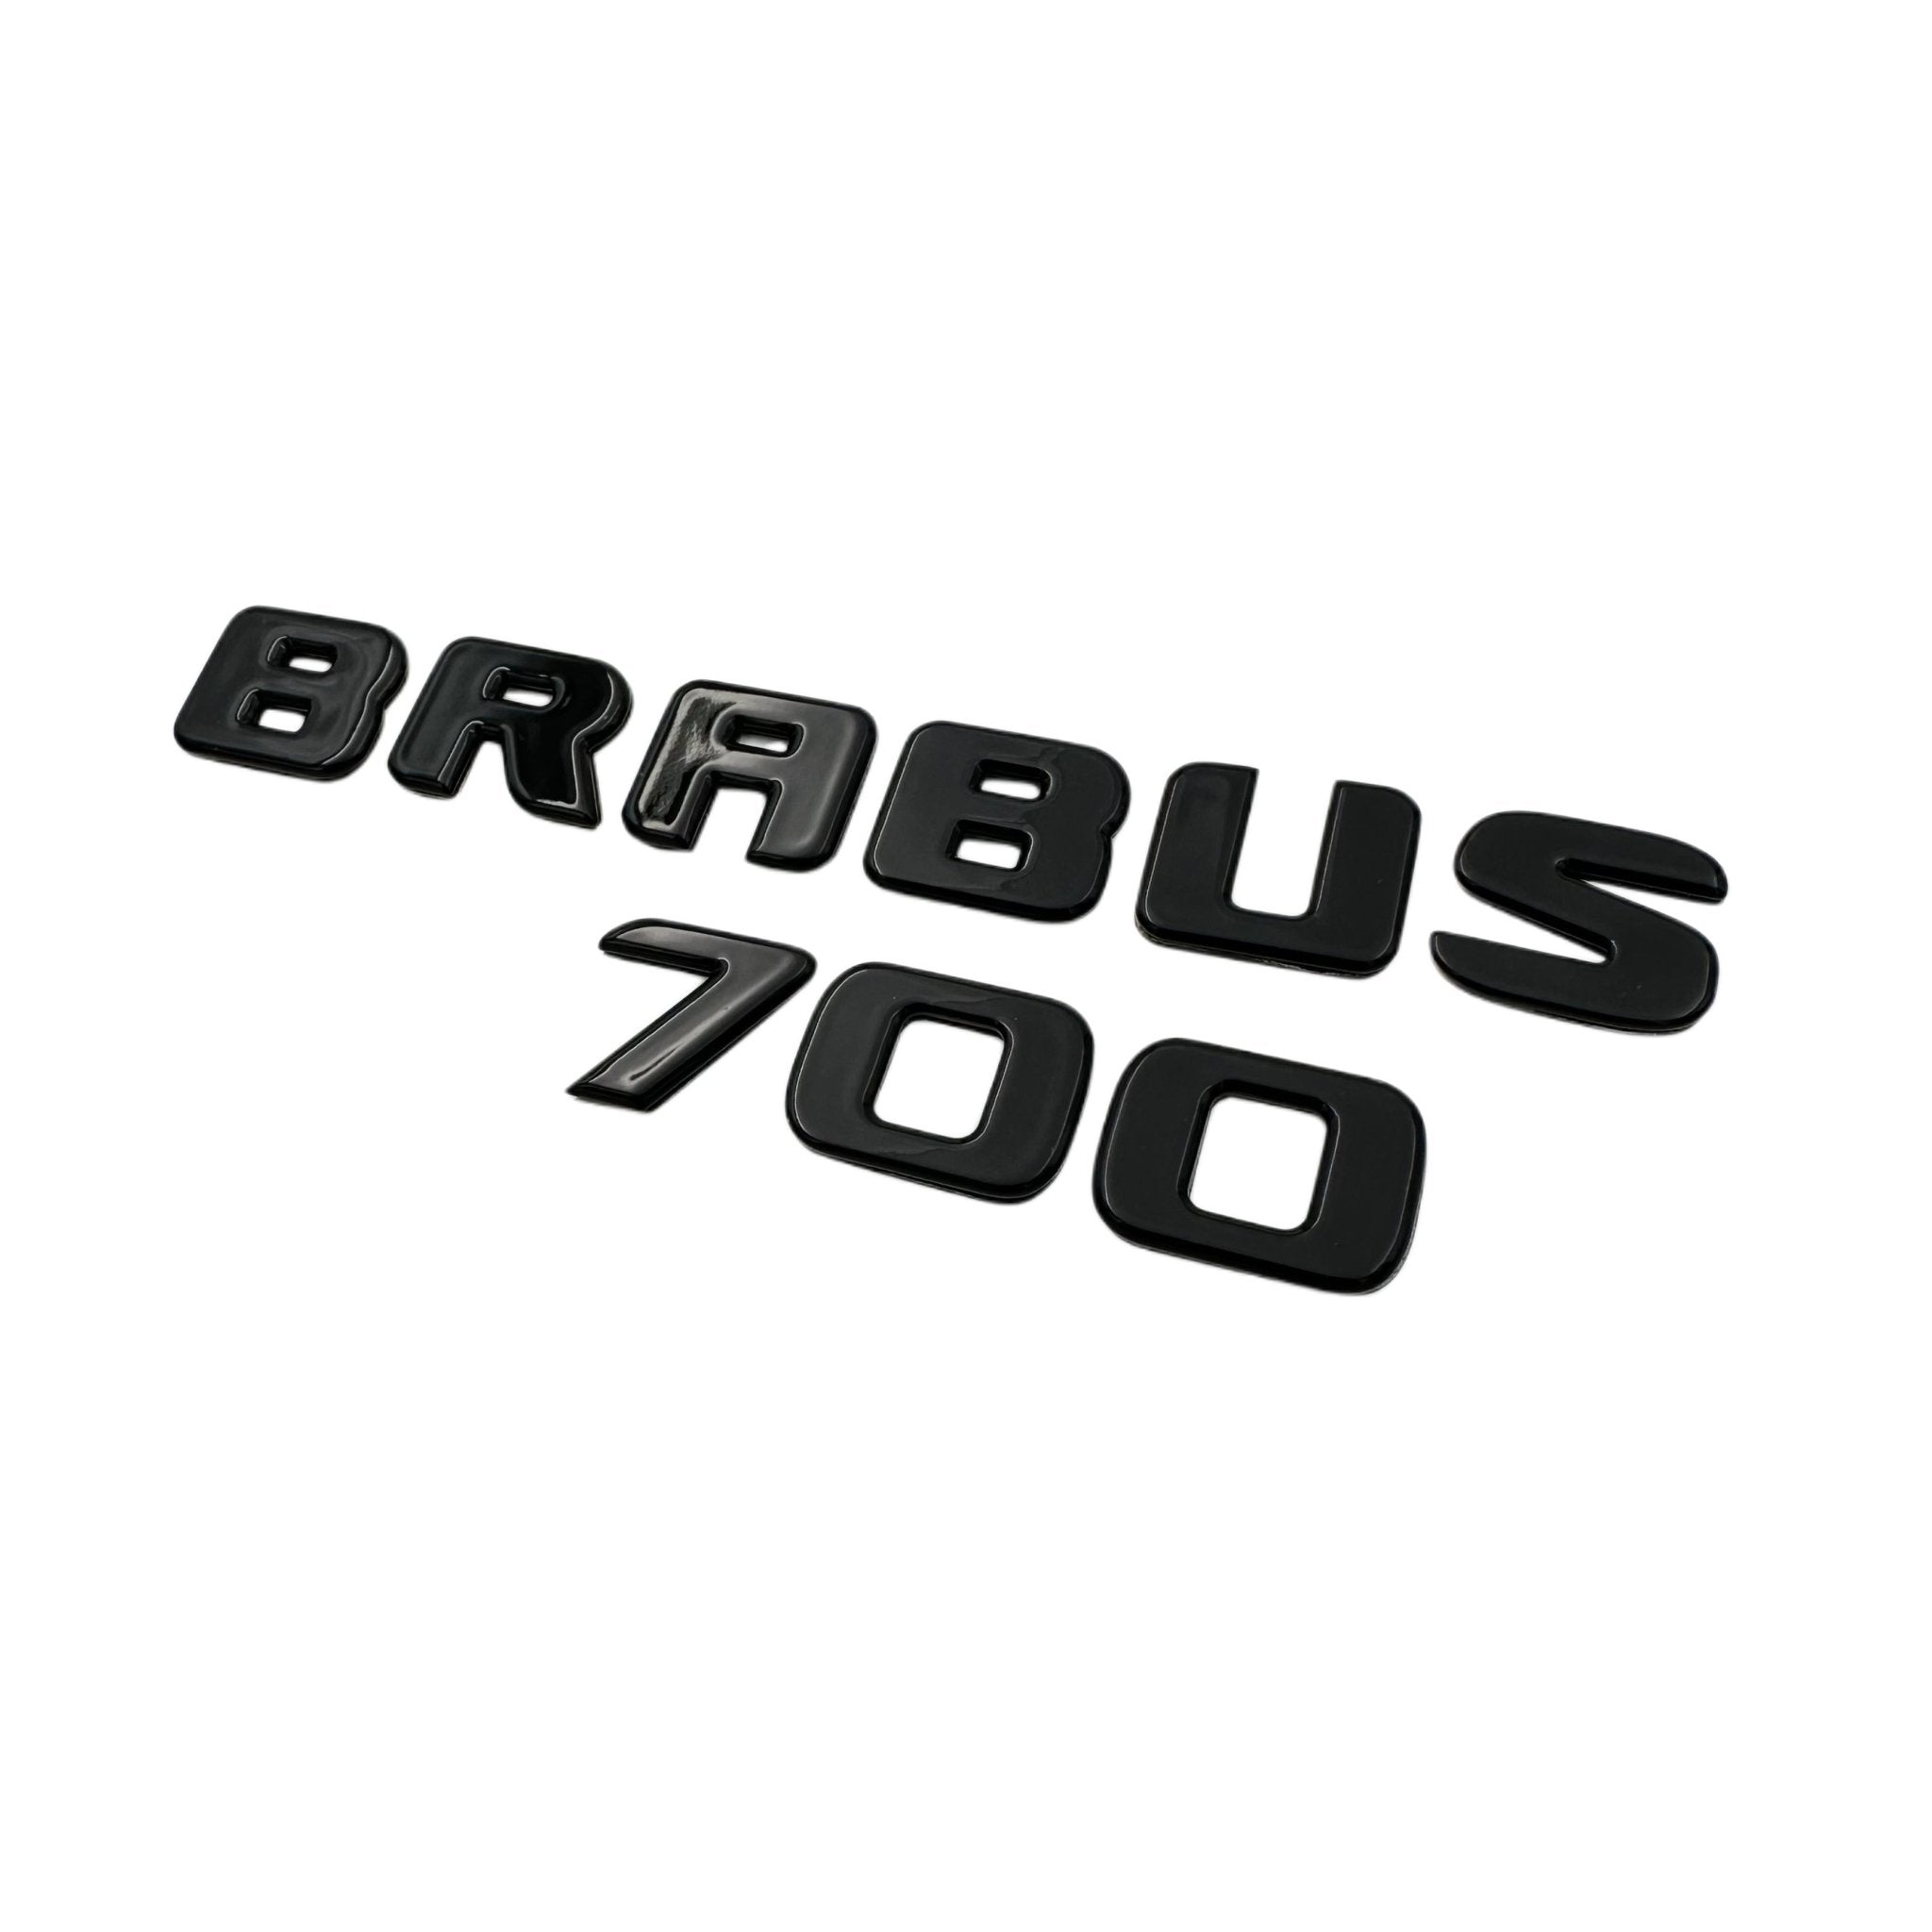 Metallic Brabus 700 rear trunk letters emblem logo badges for Mercedes-Benz G-Class W463 W463A